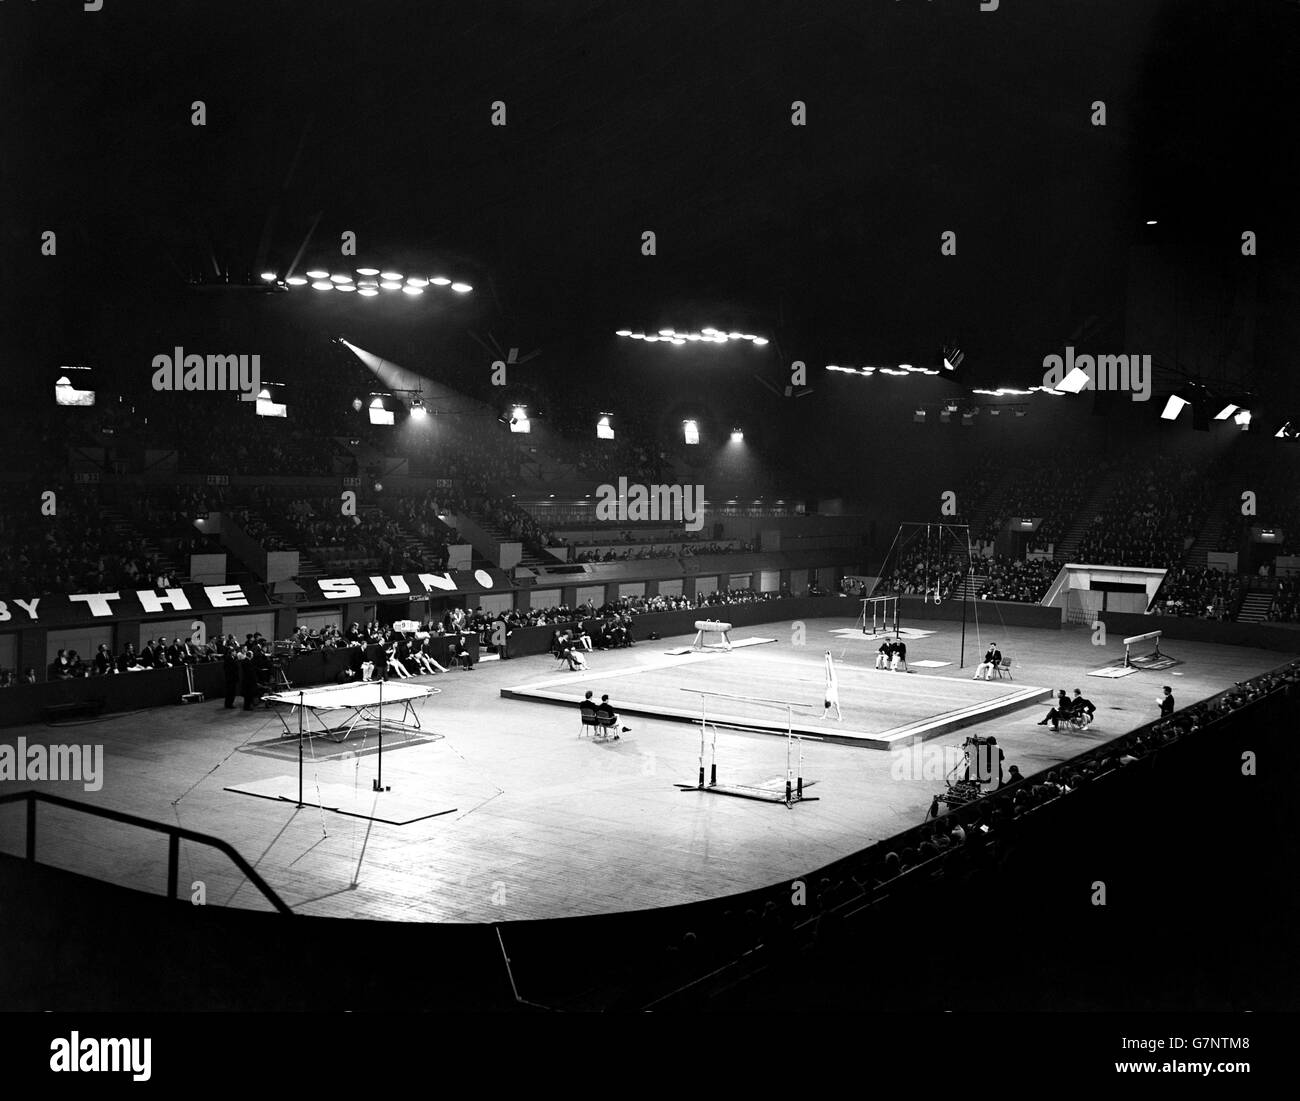 Gymnastique - International Gym and trampoline Match - Grande-Bretagne / Etats-Unis - Empire Pool, Wembley, Londres.Vue de l'Empire Pool, Wembley, où la Grande-Bretagne s'opposait aux États-Unis dans un concours de gymnastique et de trampoline. Banque D'Images